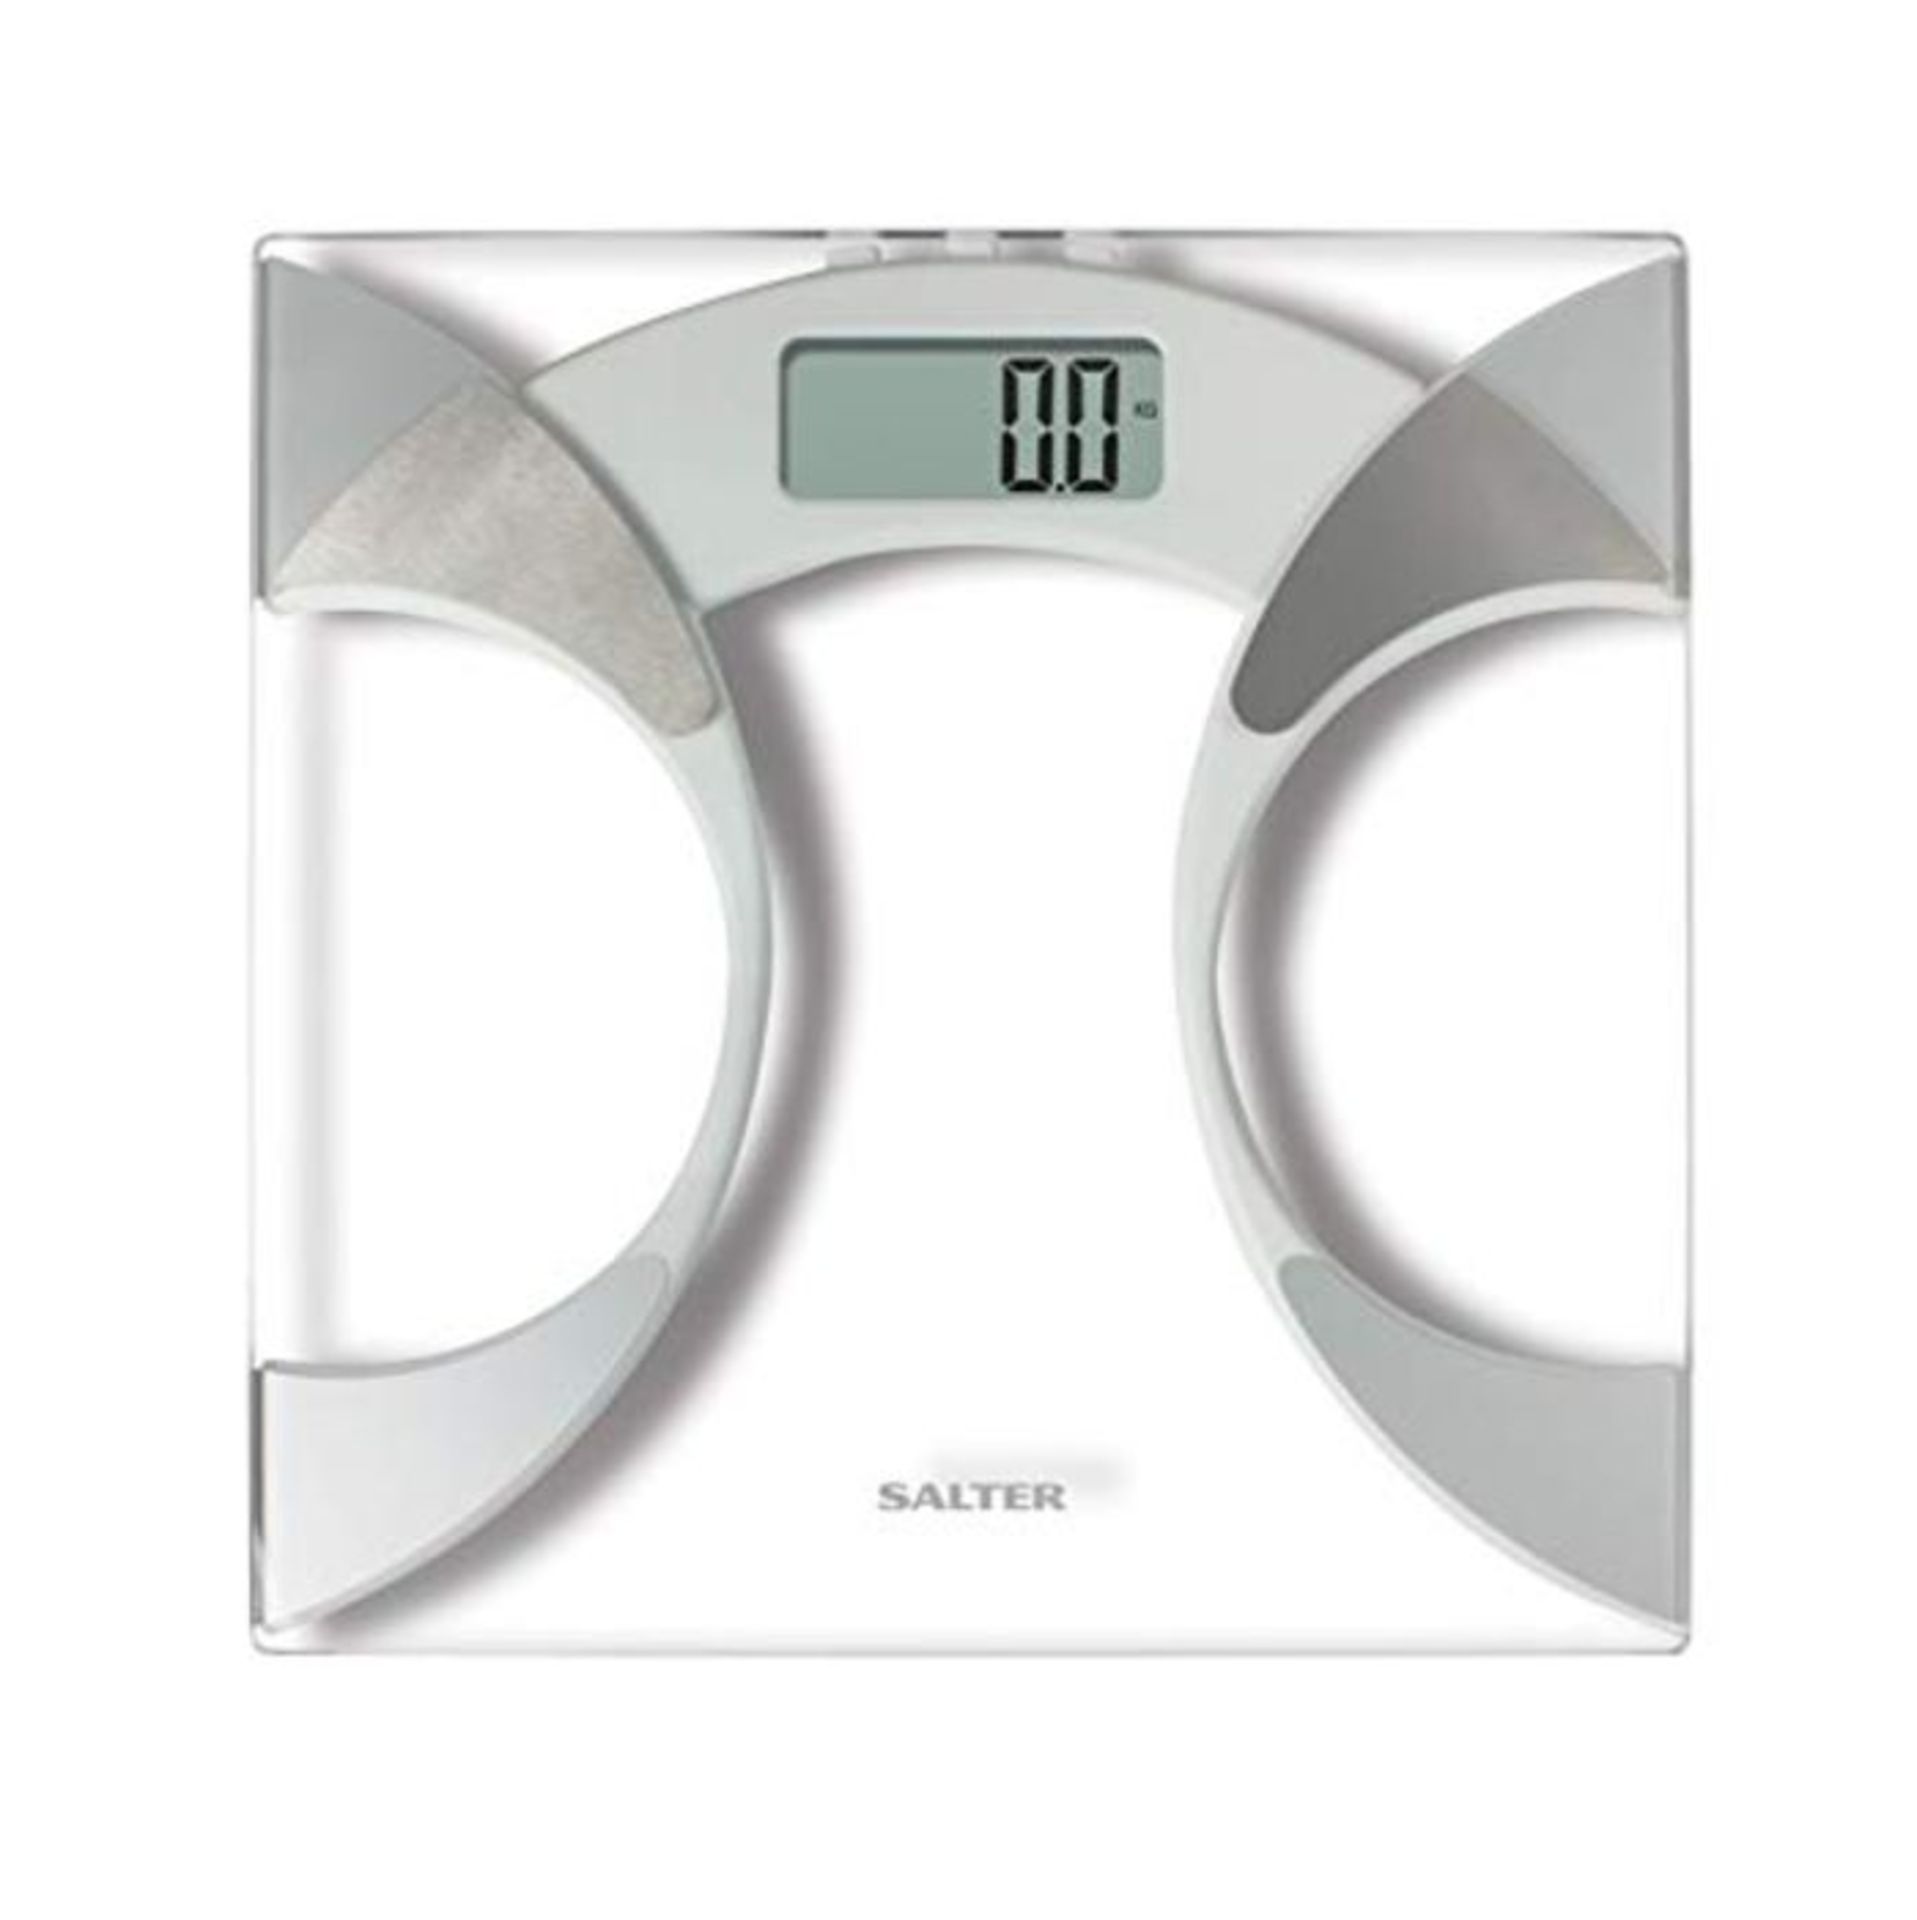 Salter Ultra Slim Analyser Bathroom Scales, Measure Weight BMI BMR Body Fat Percentage